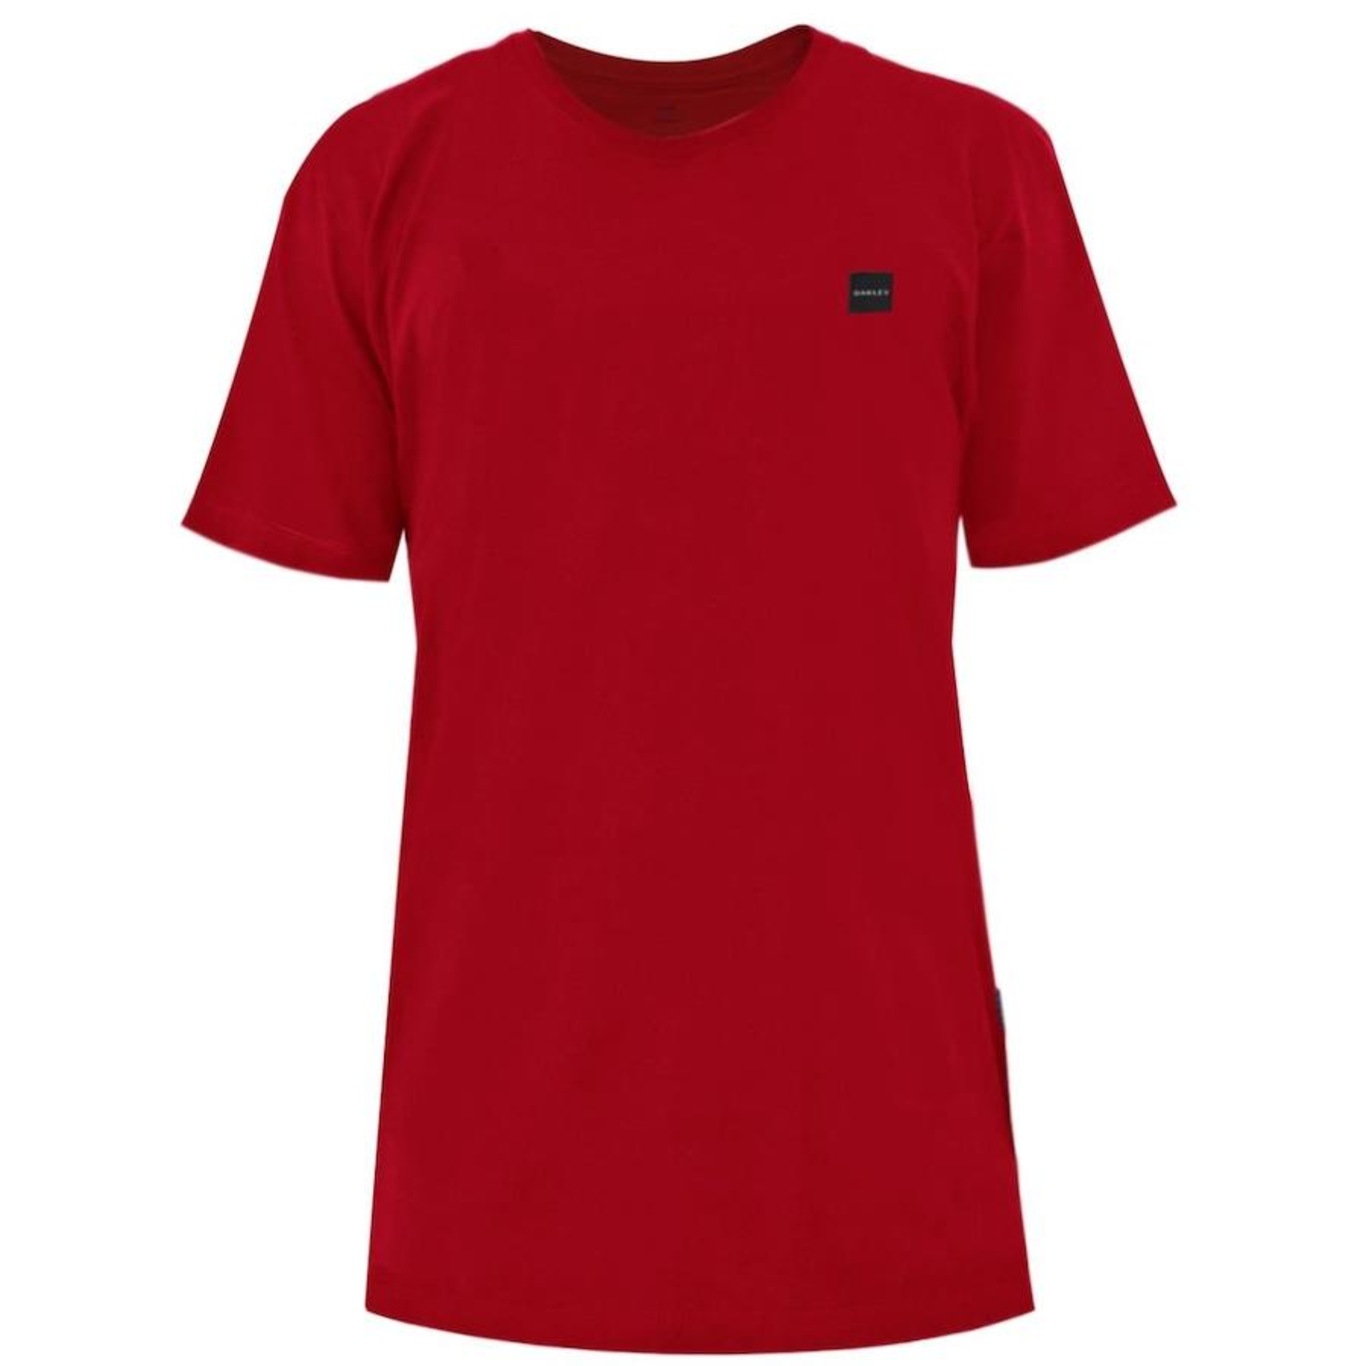 Camiseta Oakley Patch Masculina - Vermelho